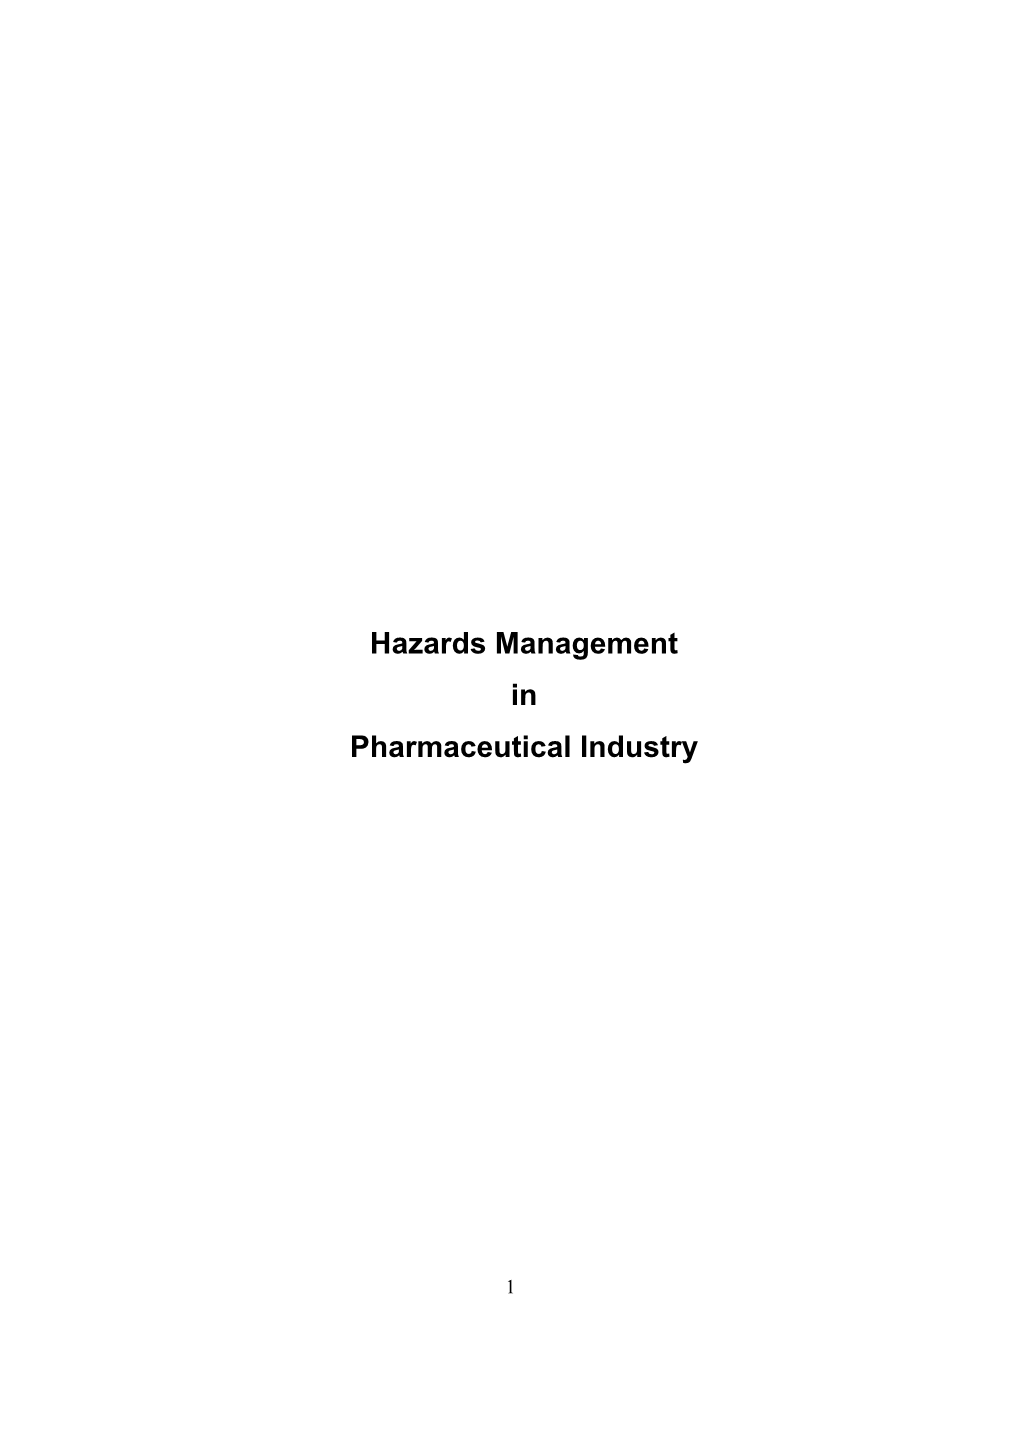 Hazards Management in Pharmaceutical Industry